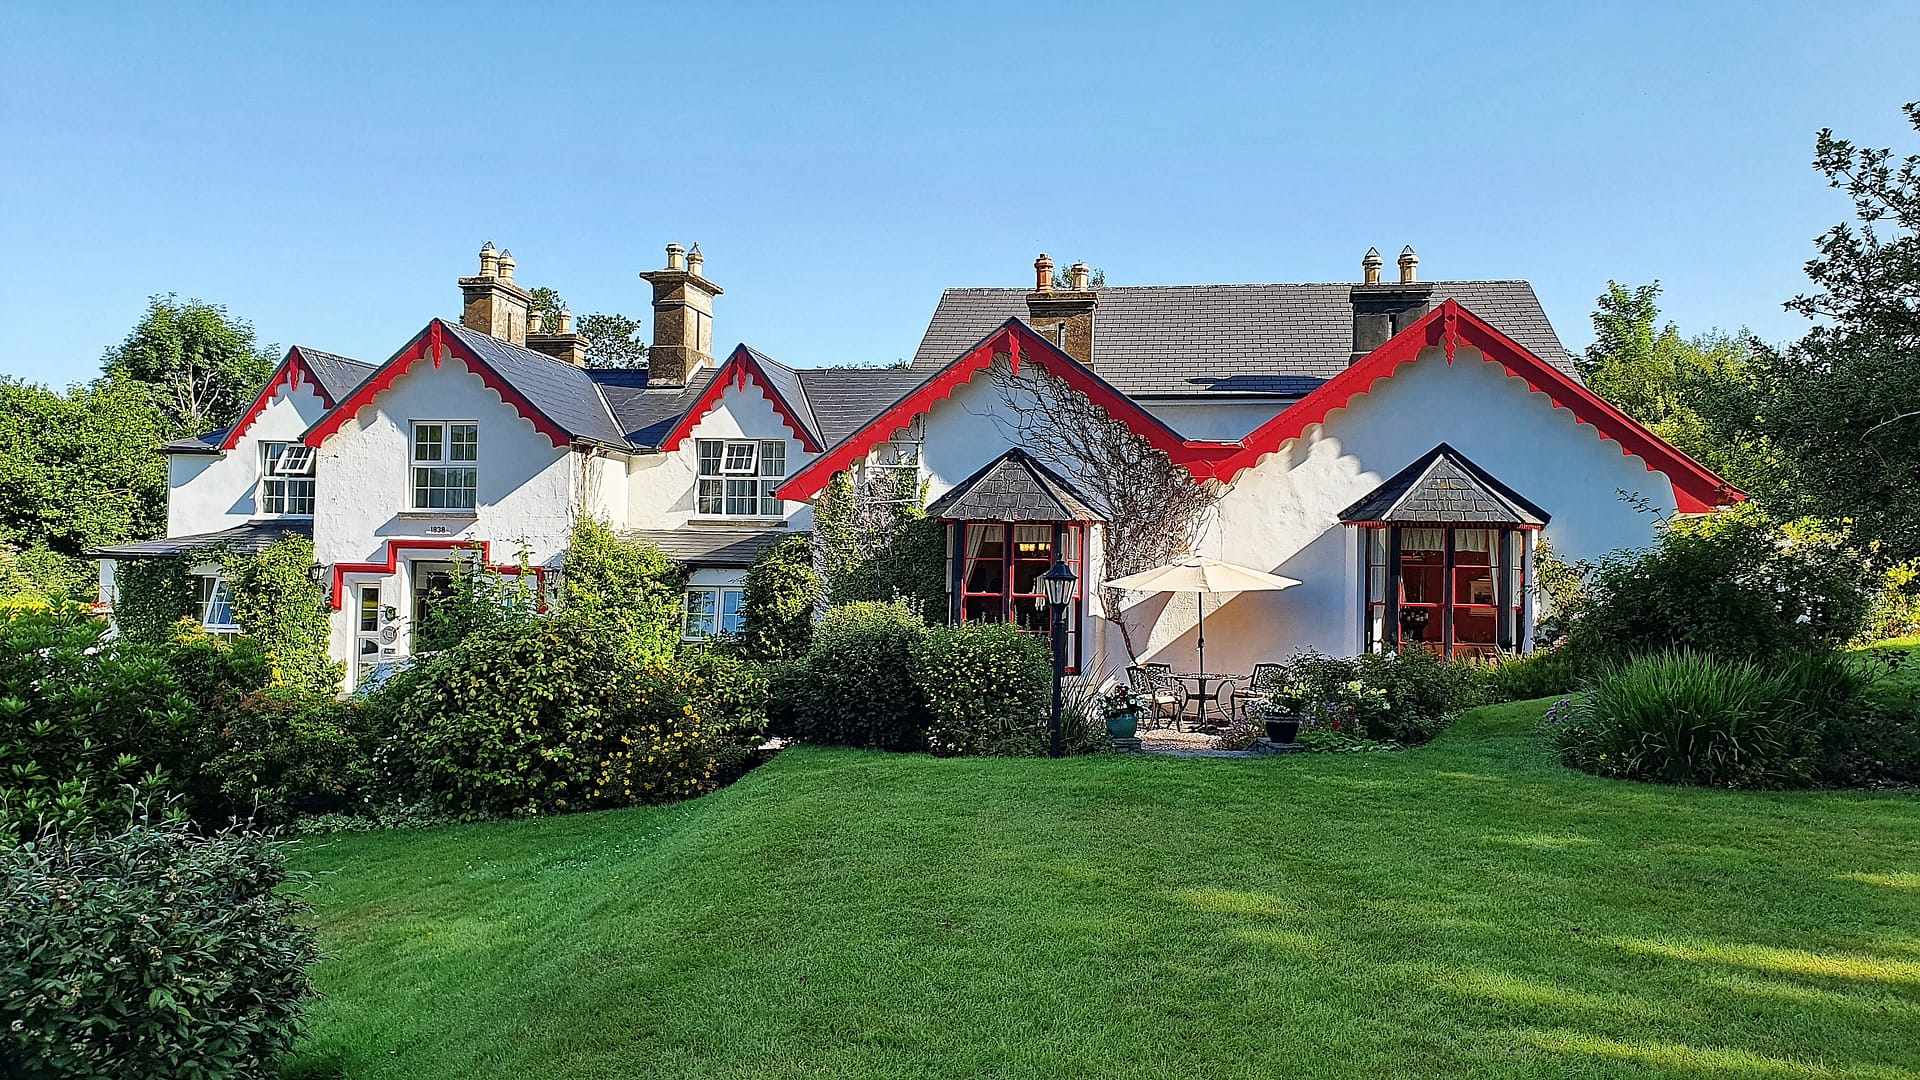 The Killeen House Hotel and Restaurant is located near Killarney, Ireland.